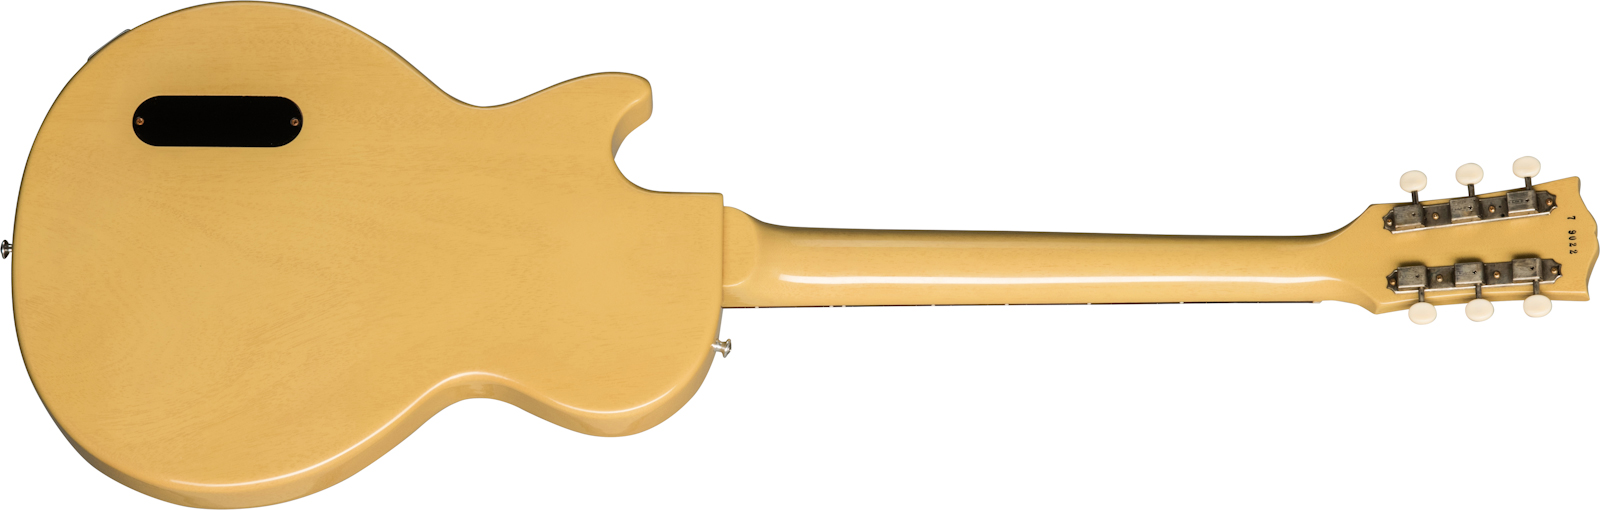 Gibson Custom Shop Les Paul Junior 1957 Single Cut Reissue P90 Ht Rw - Vos Tv Yellow - Guitarra eléctrica de corte único. - Variation 1